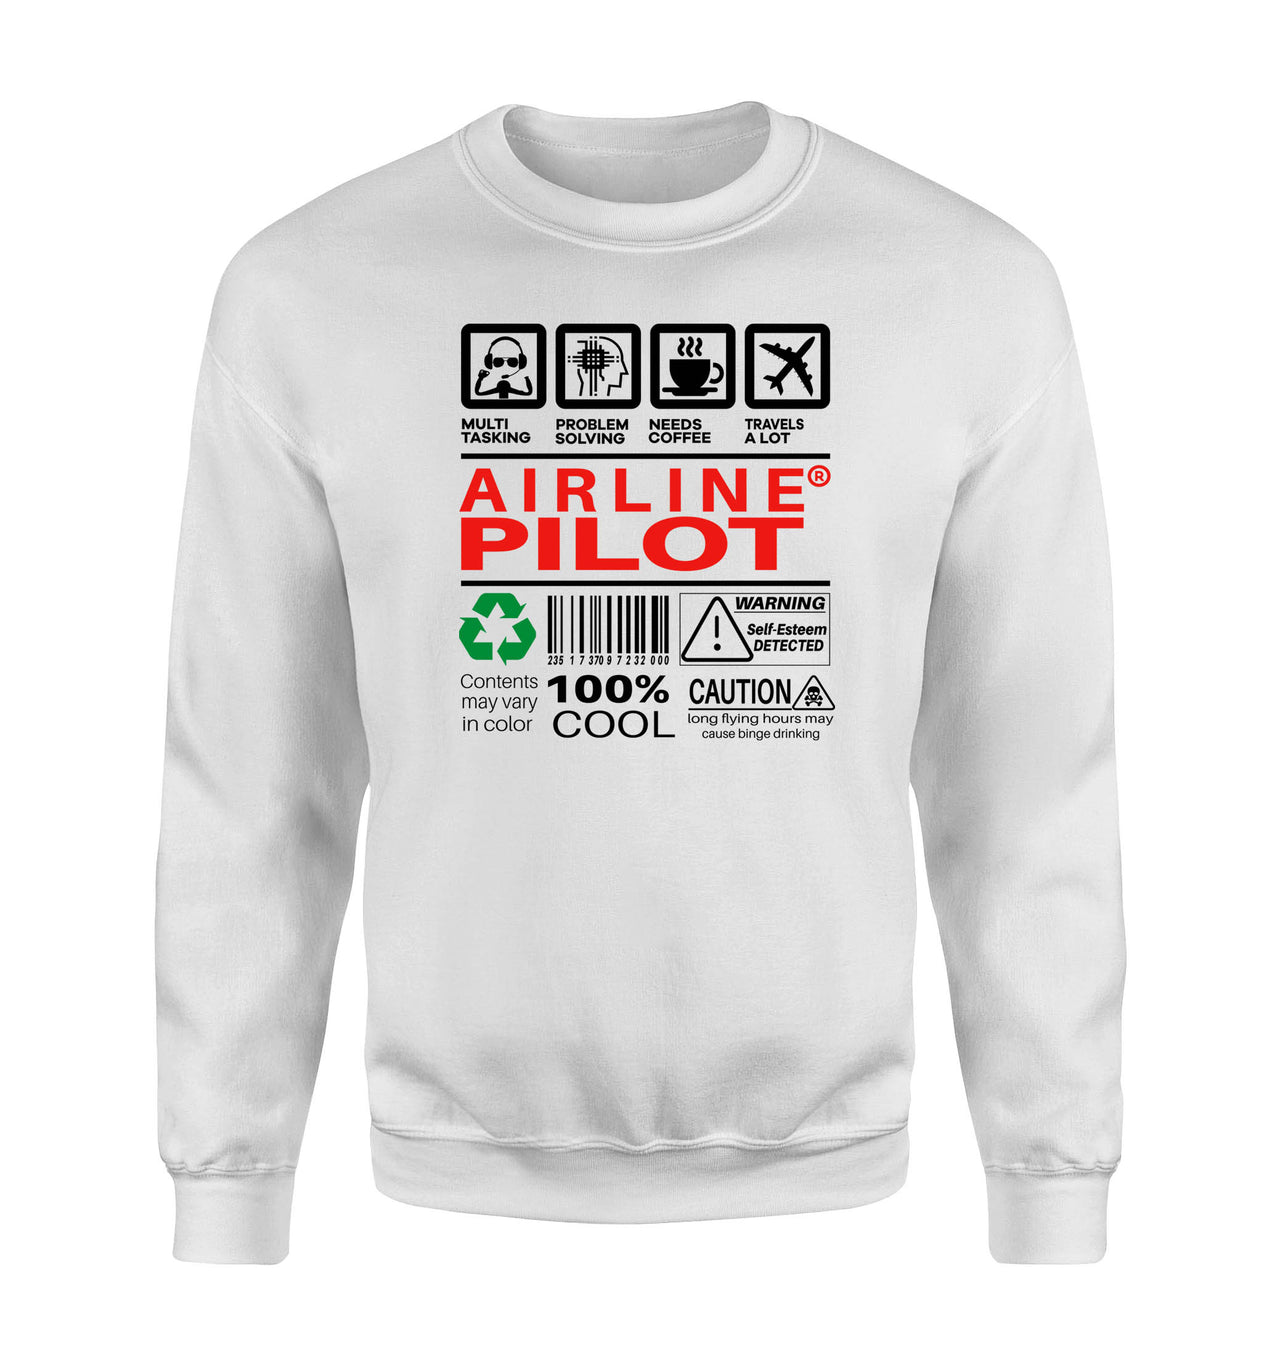 Airline Pilot Label Designed Sweatshirts